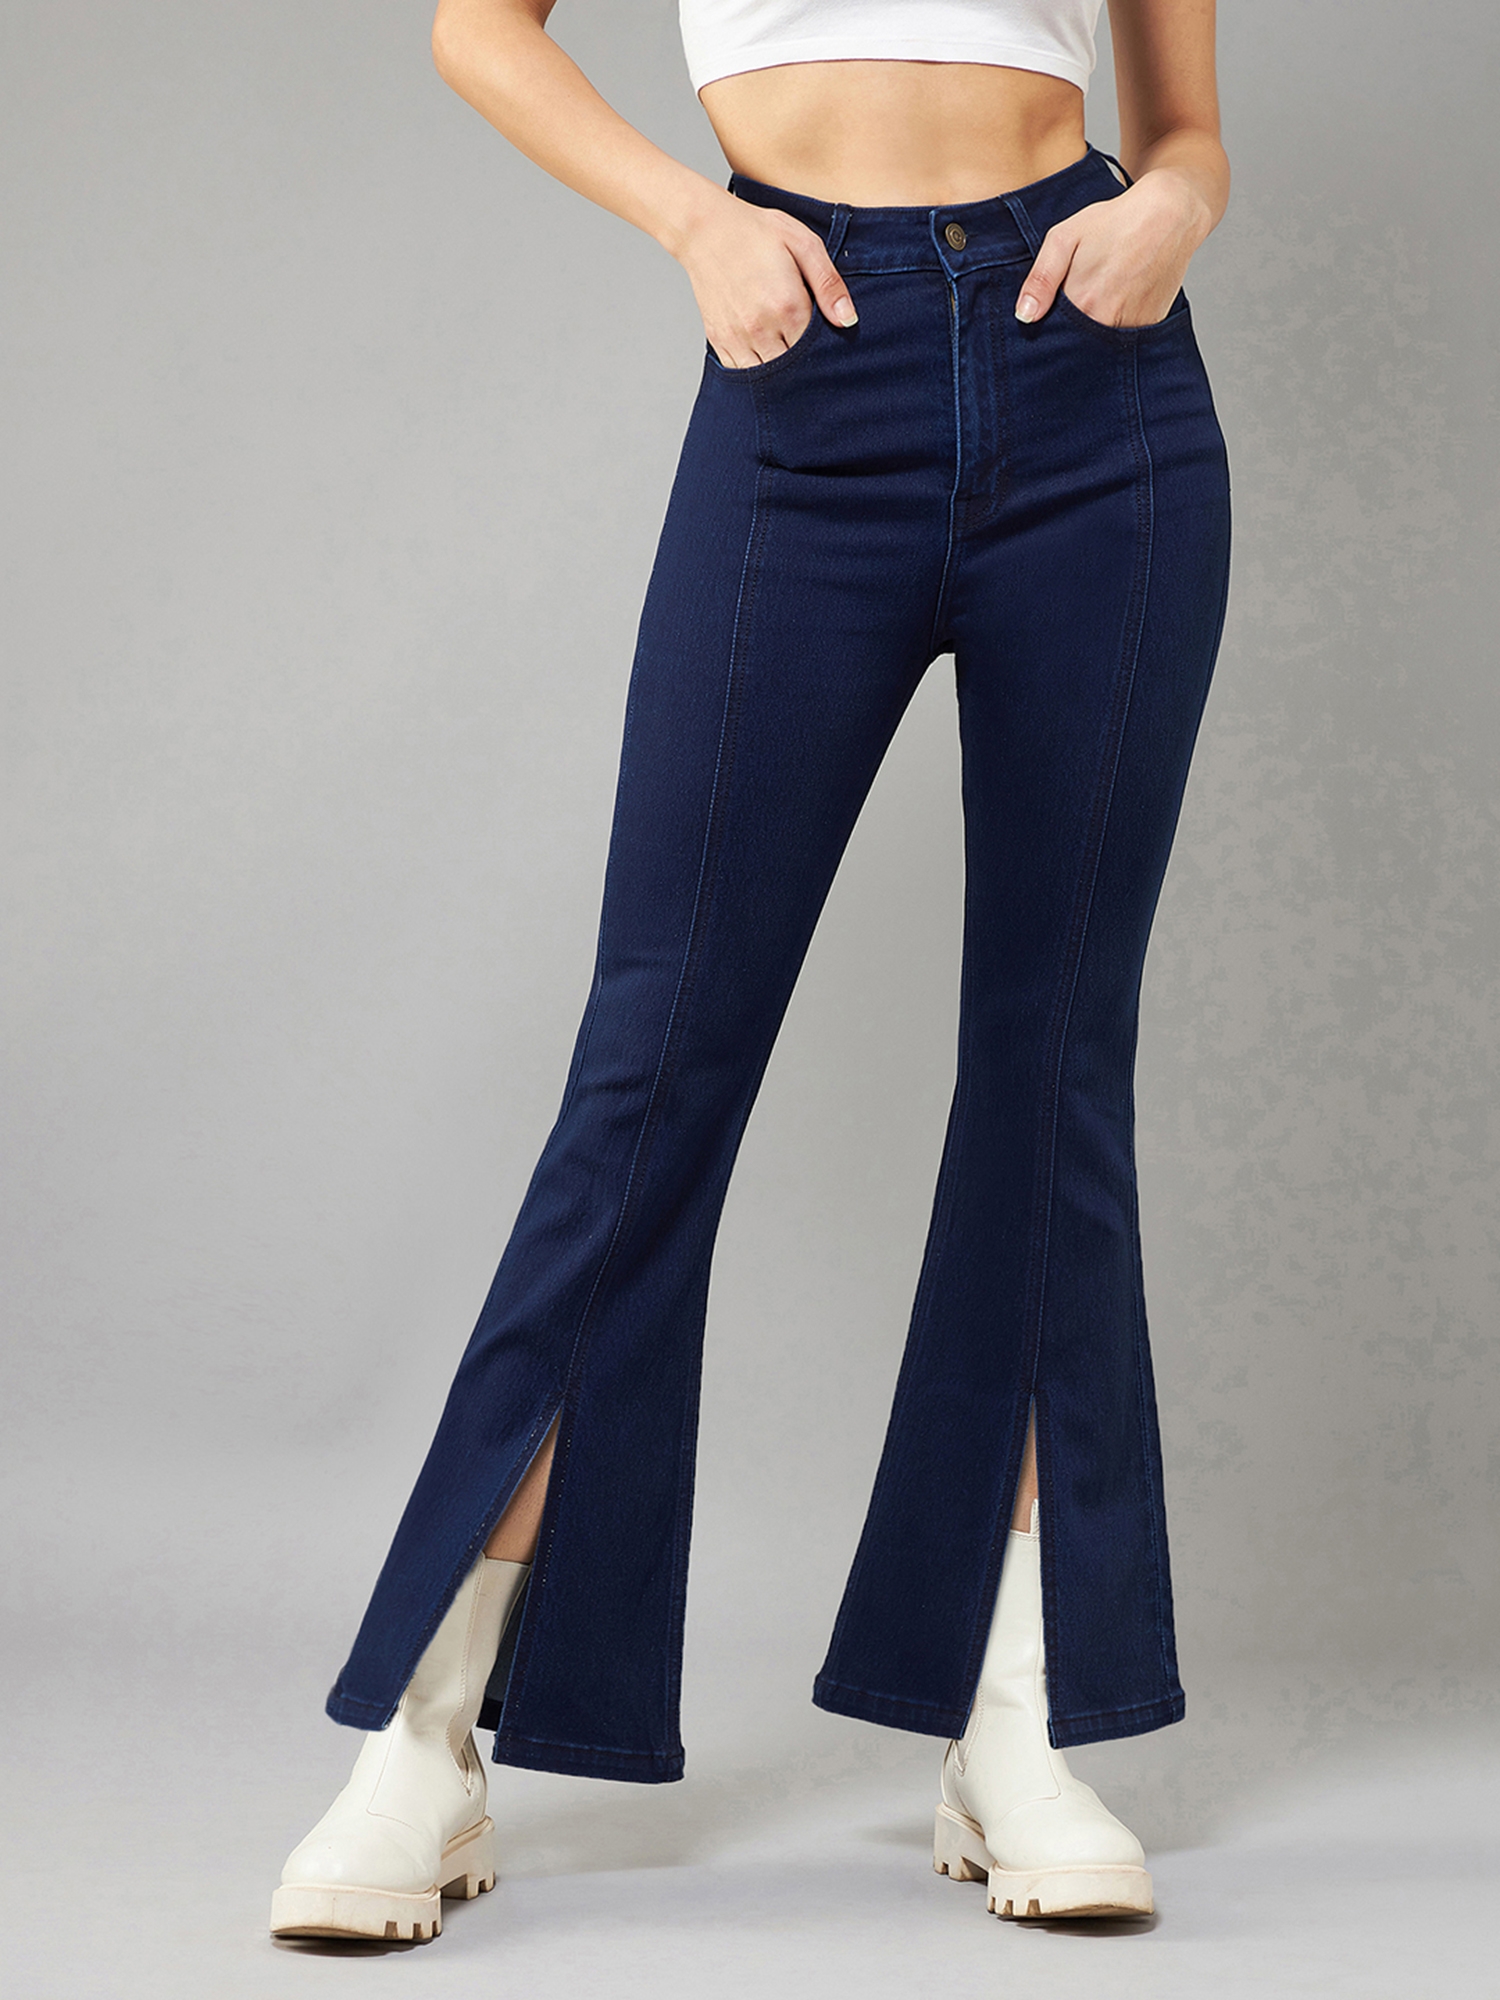 NEXT ONE Skinny Women Dark Blue Jeans - Buy NEXT ONE Skinny Women Dark Blue  Jeans Online at Best Prices in India | Flipkart.com